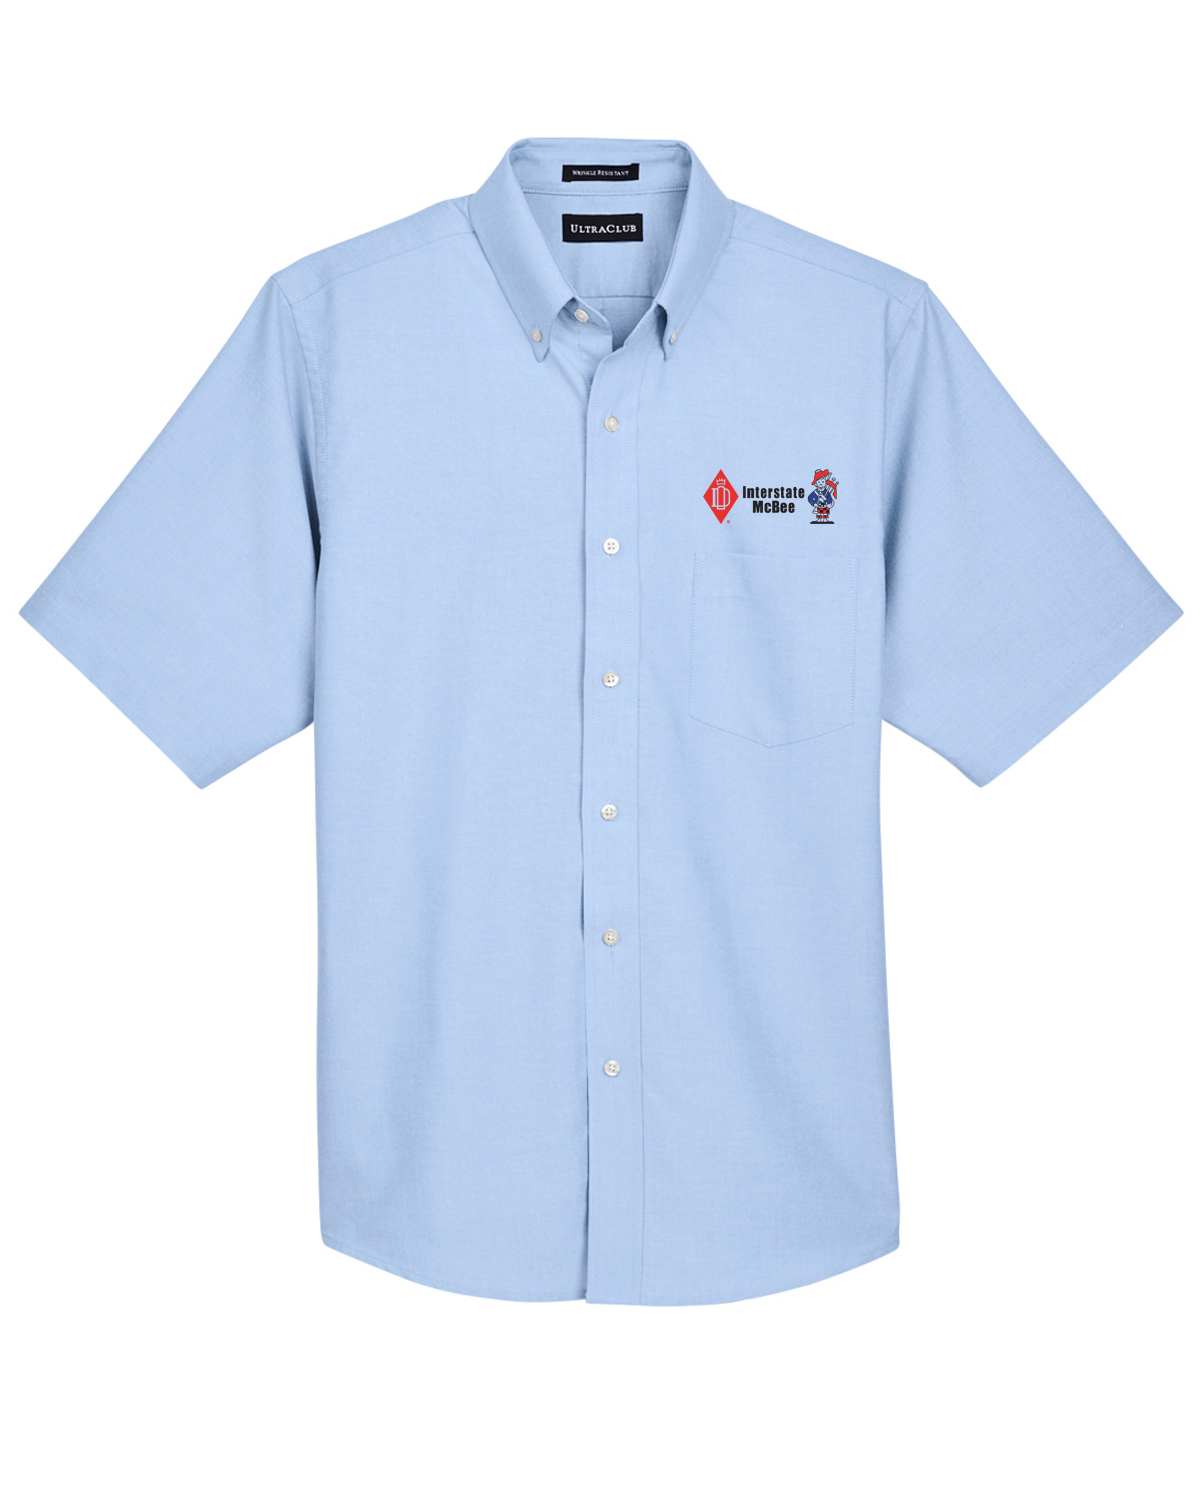 Oxford Shirt -short sleeve – IM204 | Interstate McBee, LLC Apparel ...